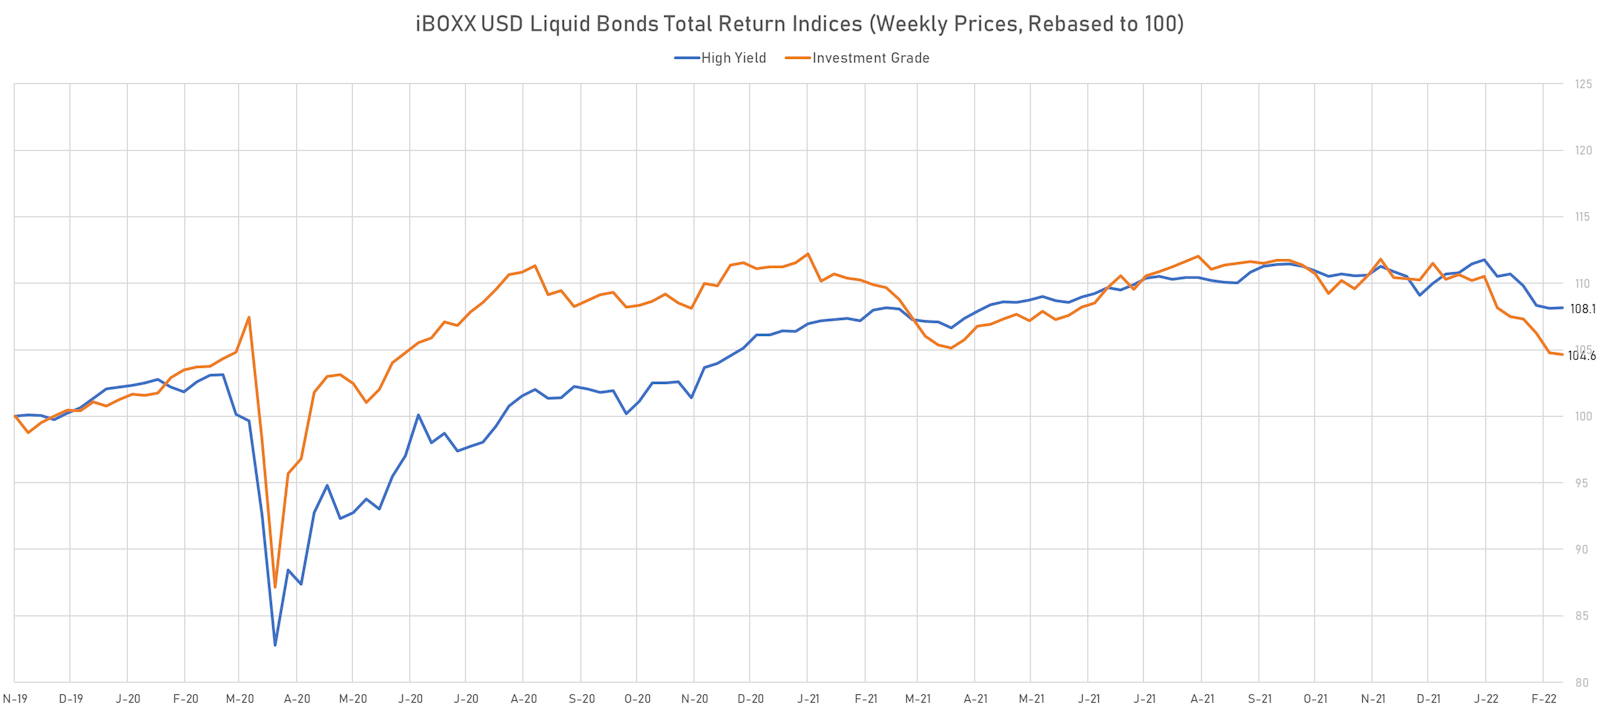 iBOXX USD Liquid IG & HY Total Return Indices | Sources: ϕpost, Refinitiv data